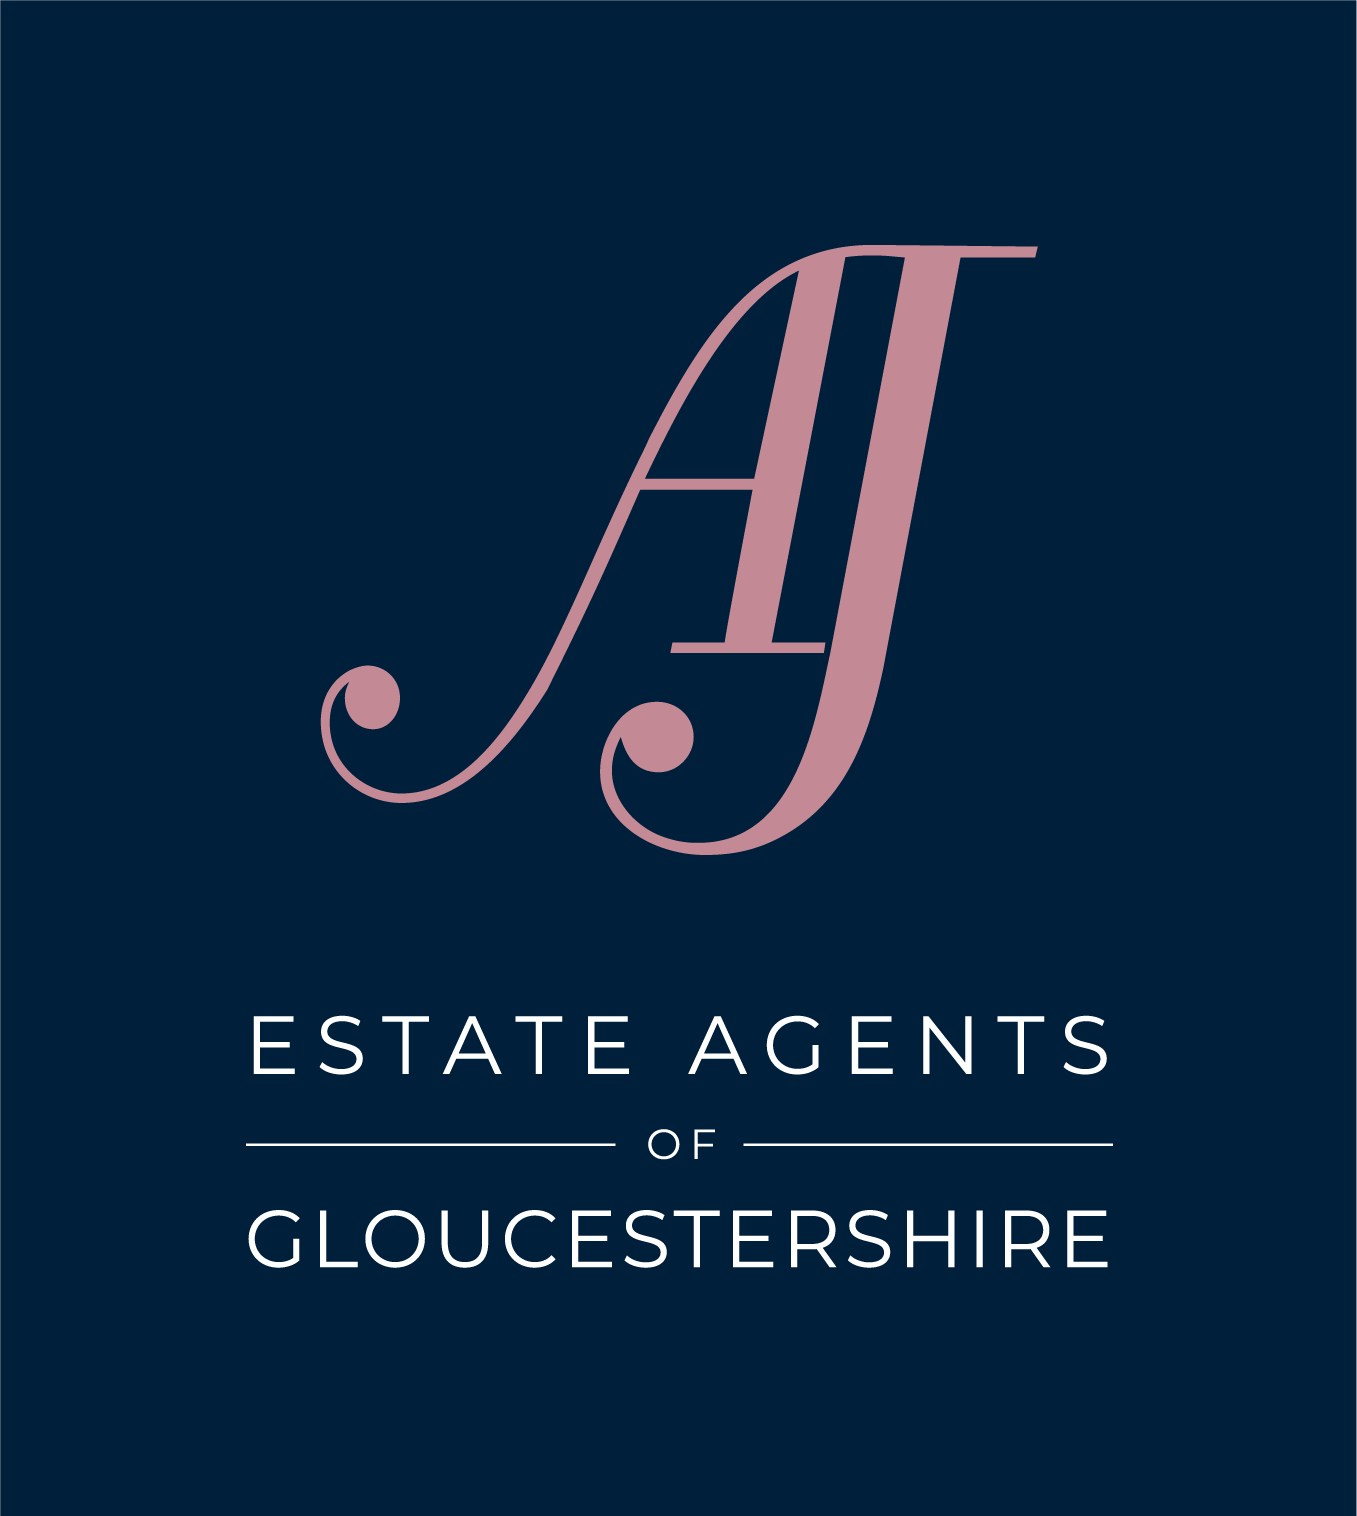 AJ Estate Agents of Gloucestershire